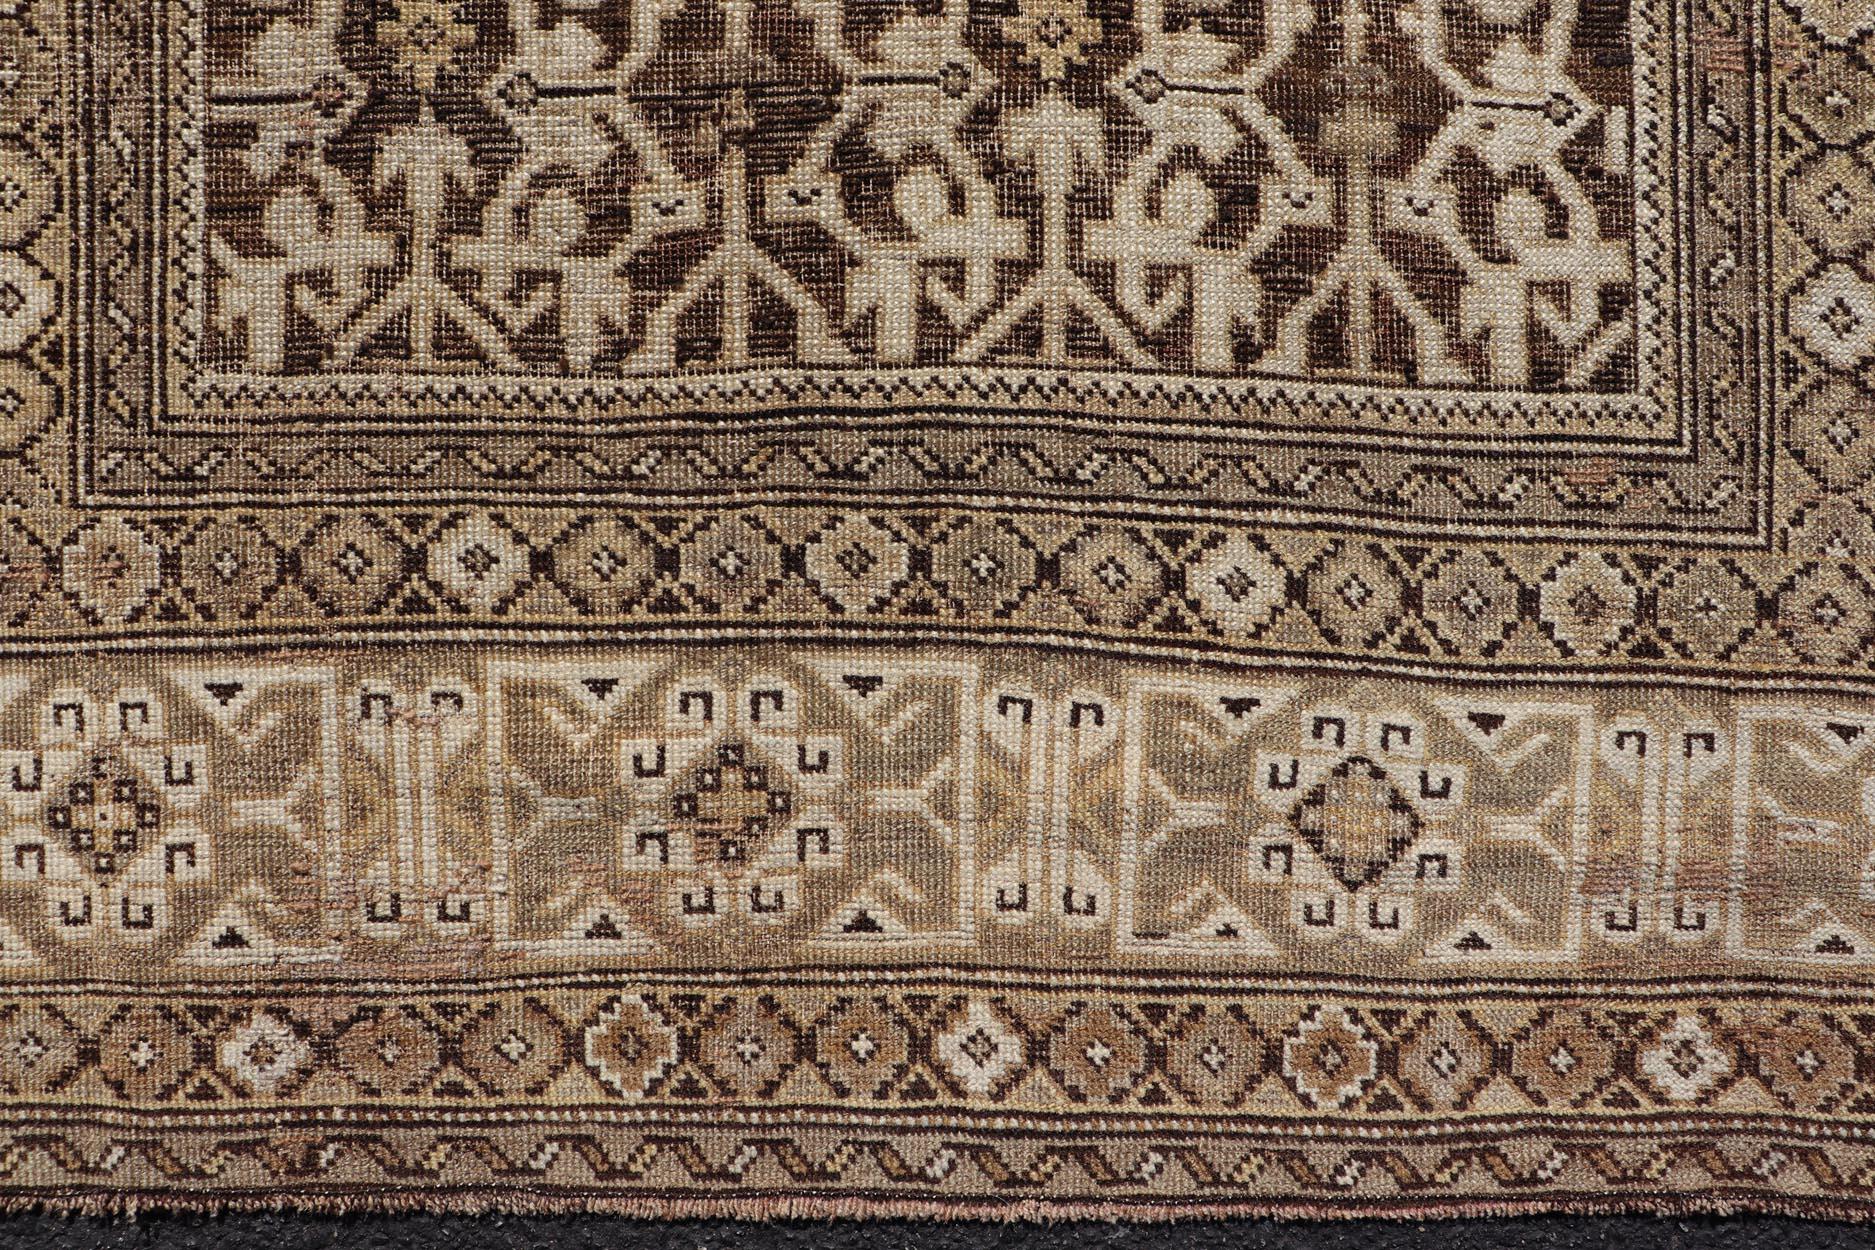 Antique Wool Hand Knotted Caucasian Kazak Rug in Dark Brown Background. Keivan Woven Arts / rug/EMB-22184-15065 Late 19th Century, Kazak rug. 
Measures: 3'9 x 5'8
This late 19th century antique Caucasian Kazak rug displays a superb Caucasian